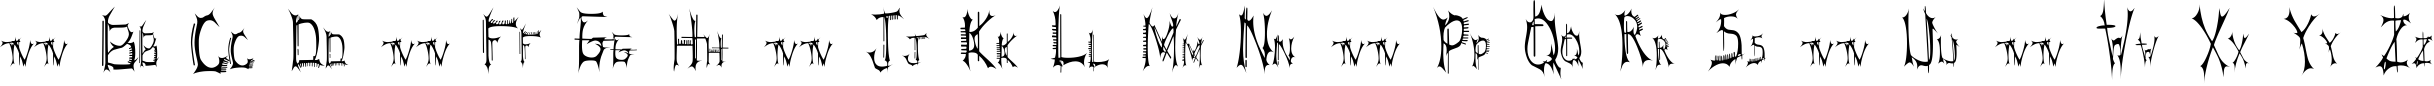 Пример написания английского алфавита шрифтом BT Speartooth TRIAL VERSION